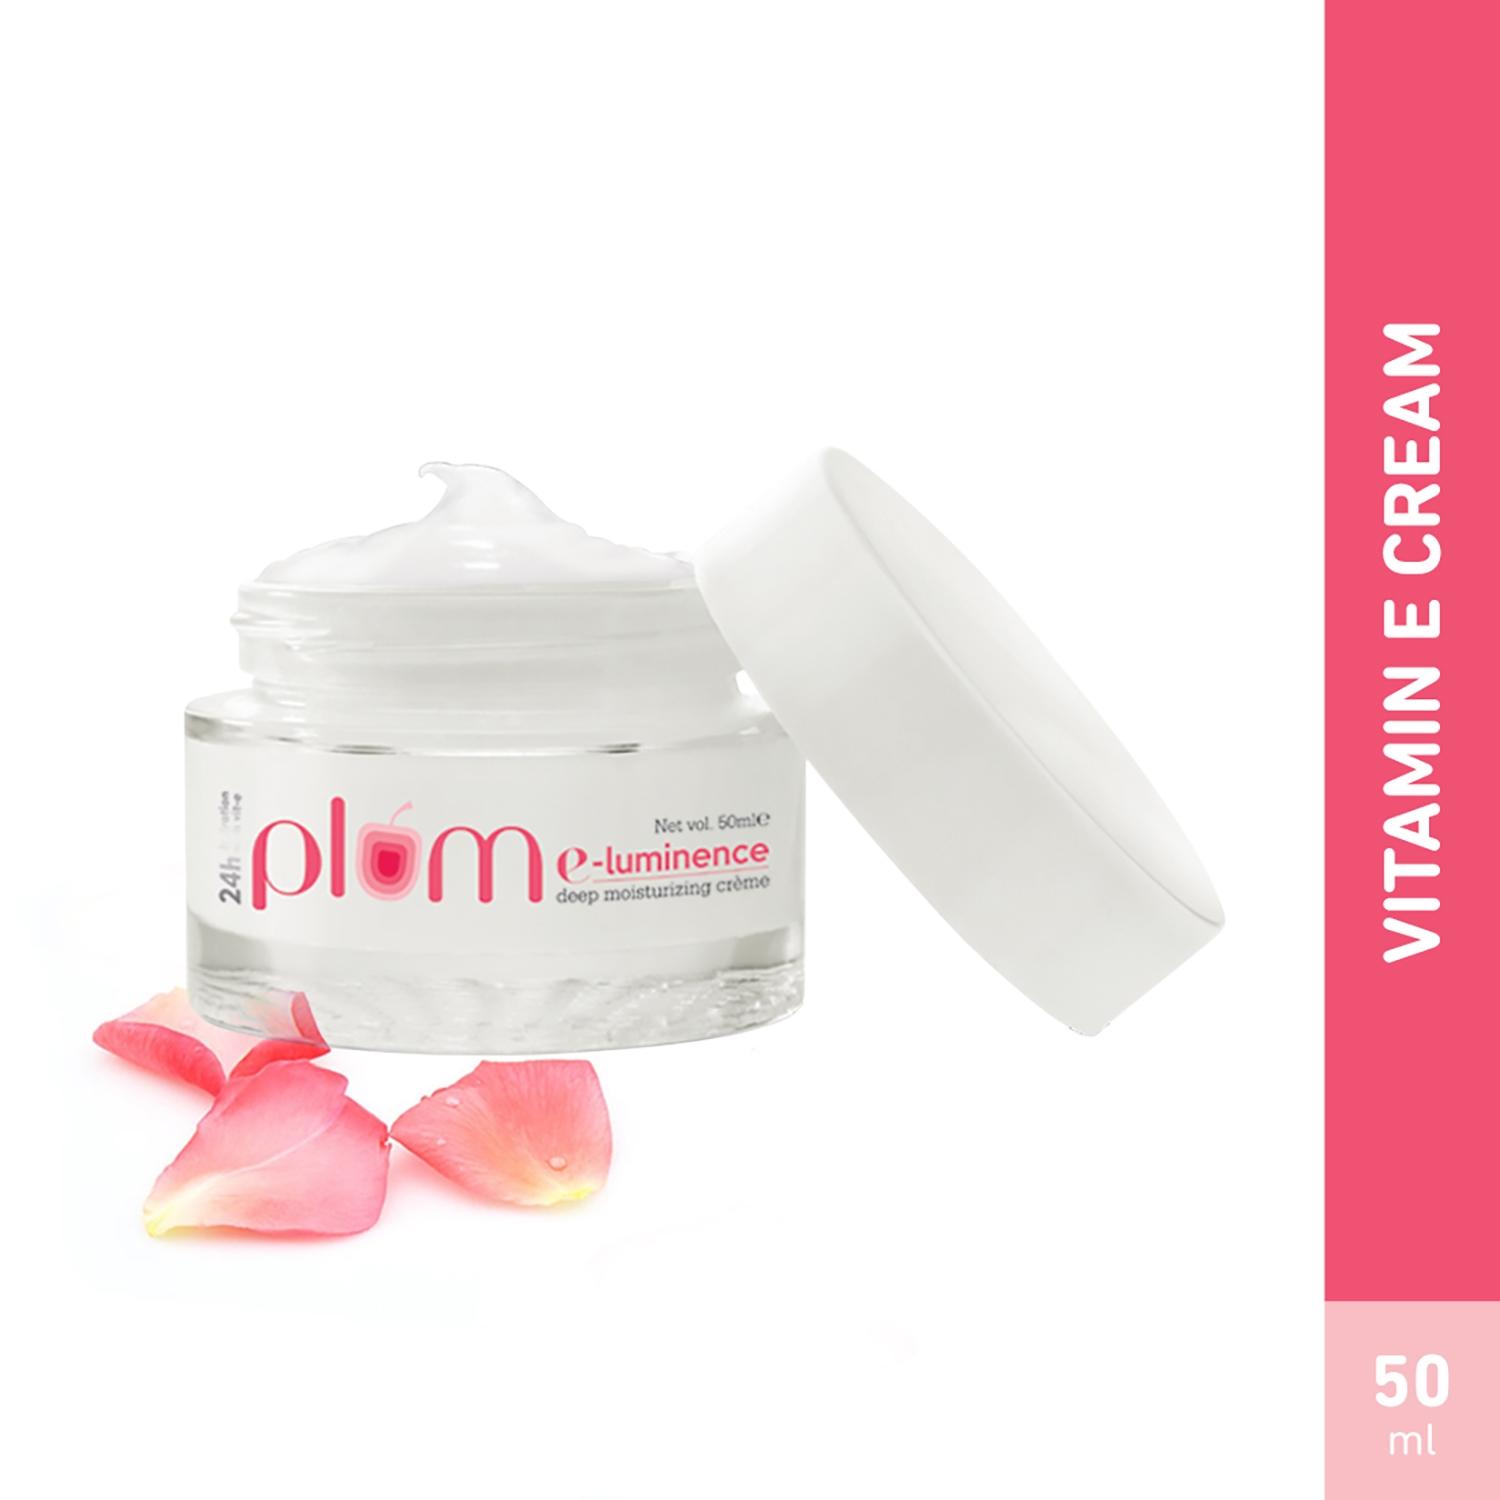 plum e-luminence deep moisturizing crème with vitamin e -intensely nourishes dry & flaky skin (50g)